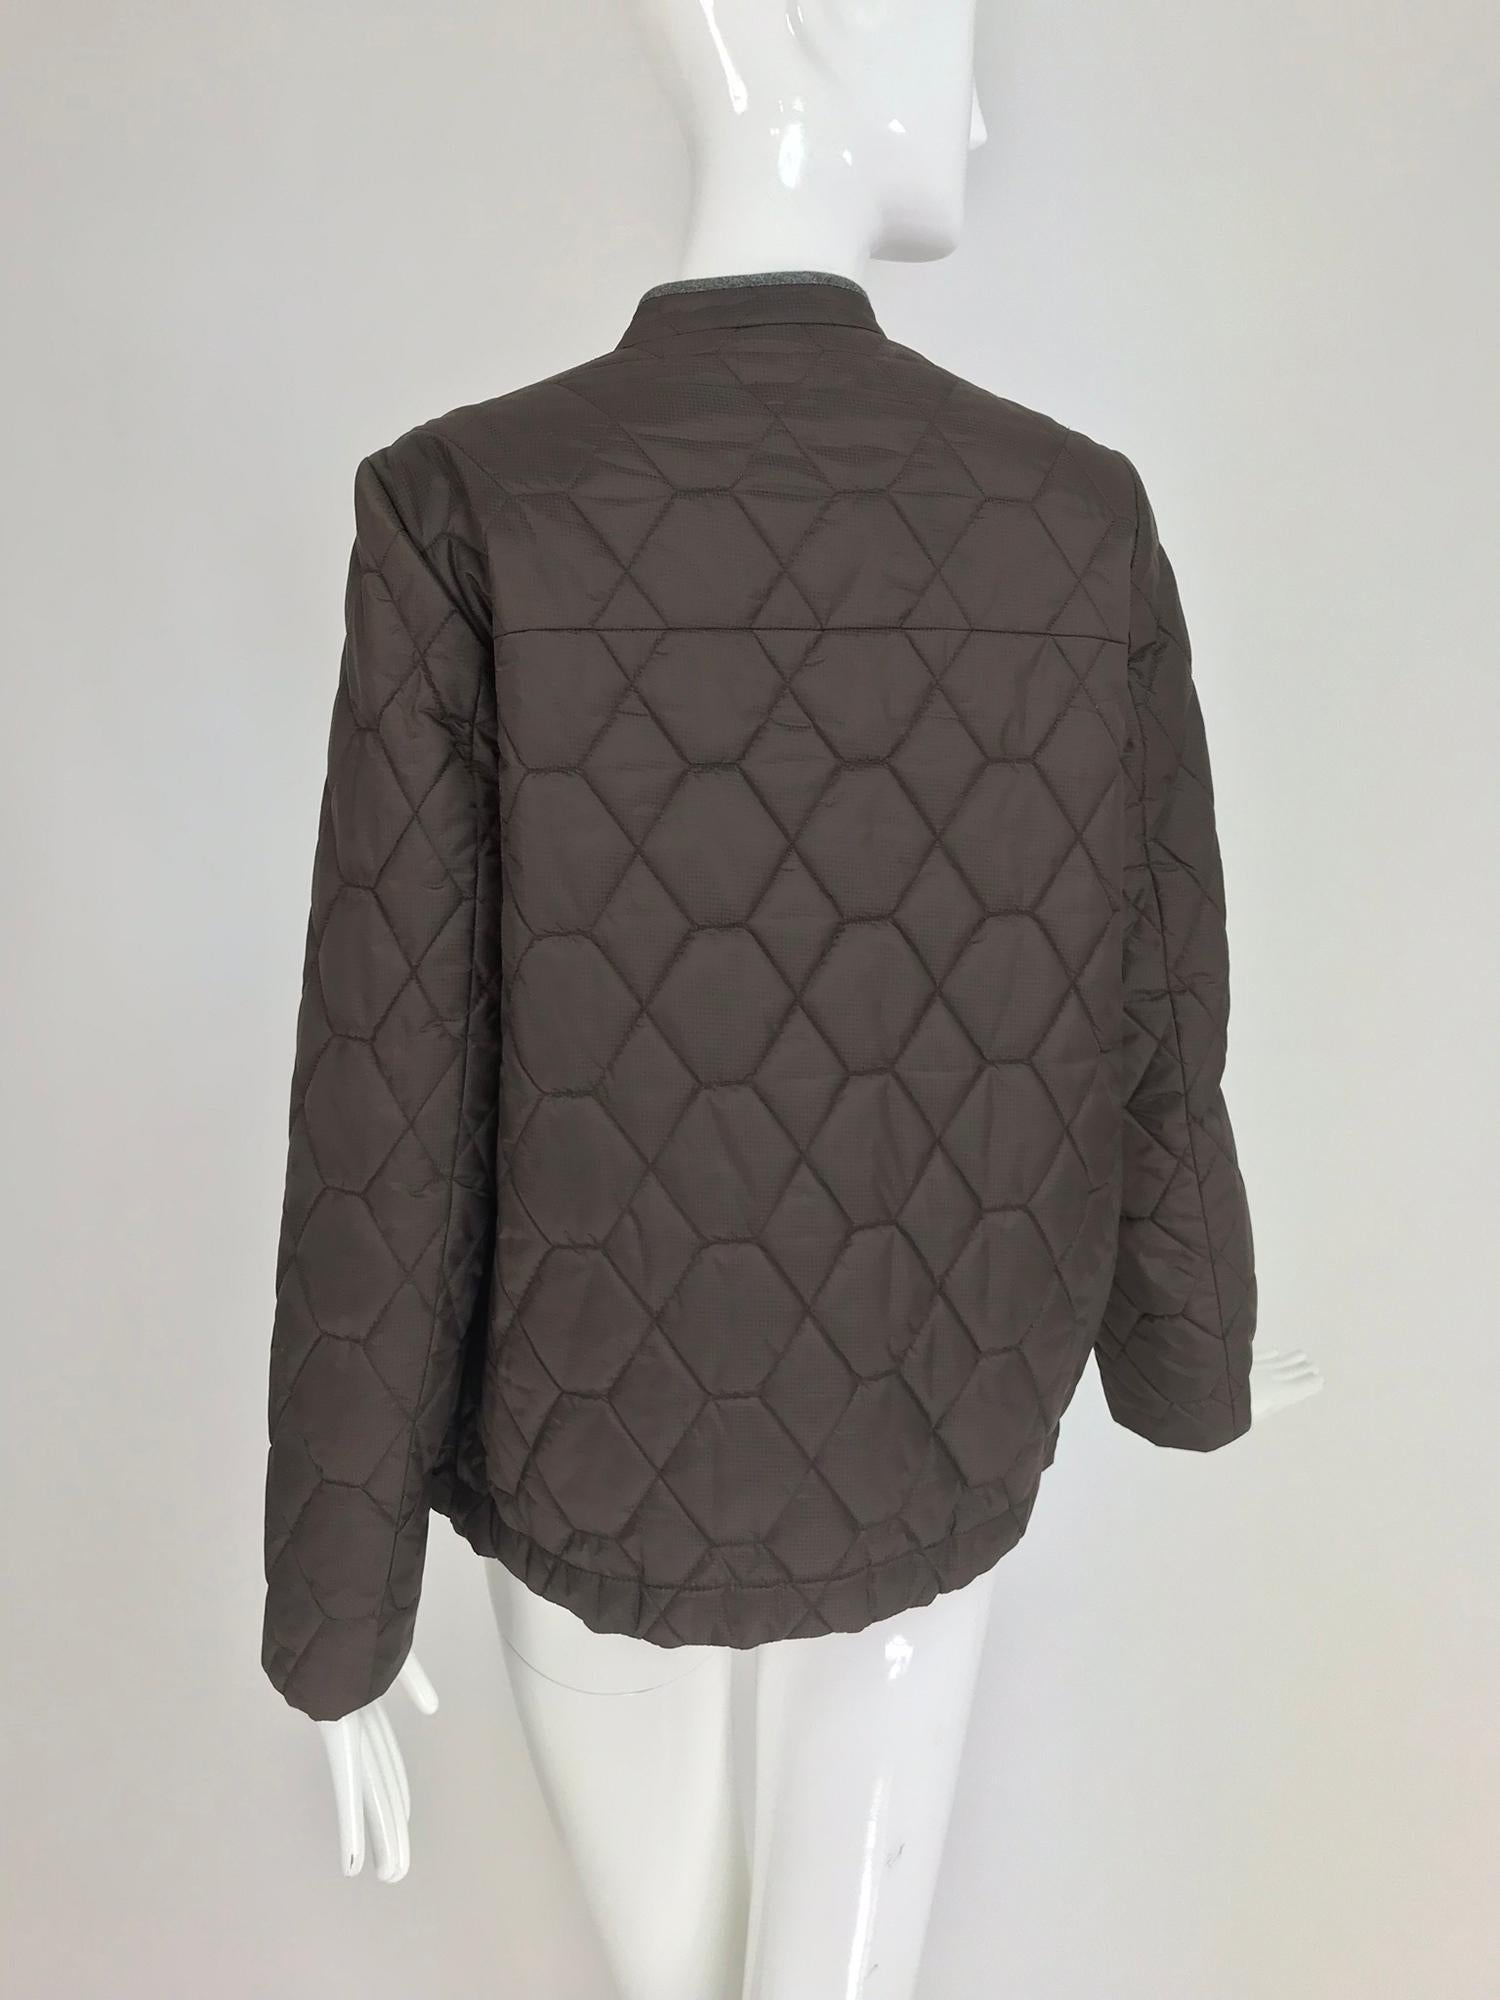 Brunello Cucinelli Chocolate Brown geometric pattern Quilted Sport Jacket 42 1